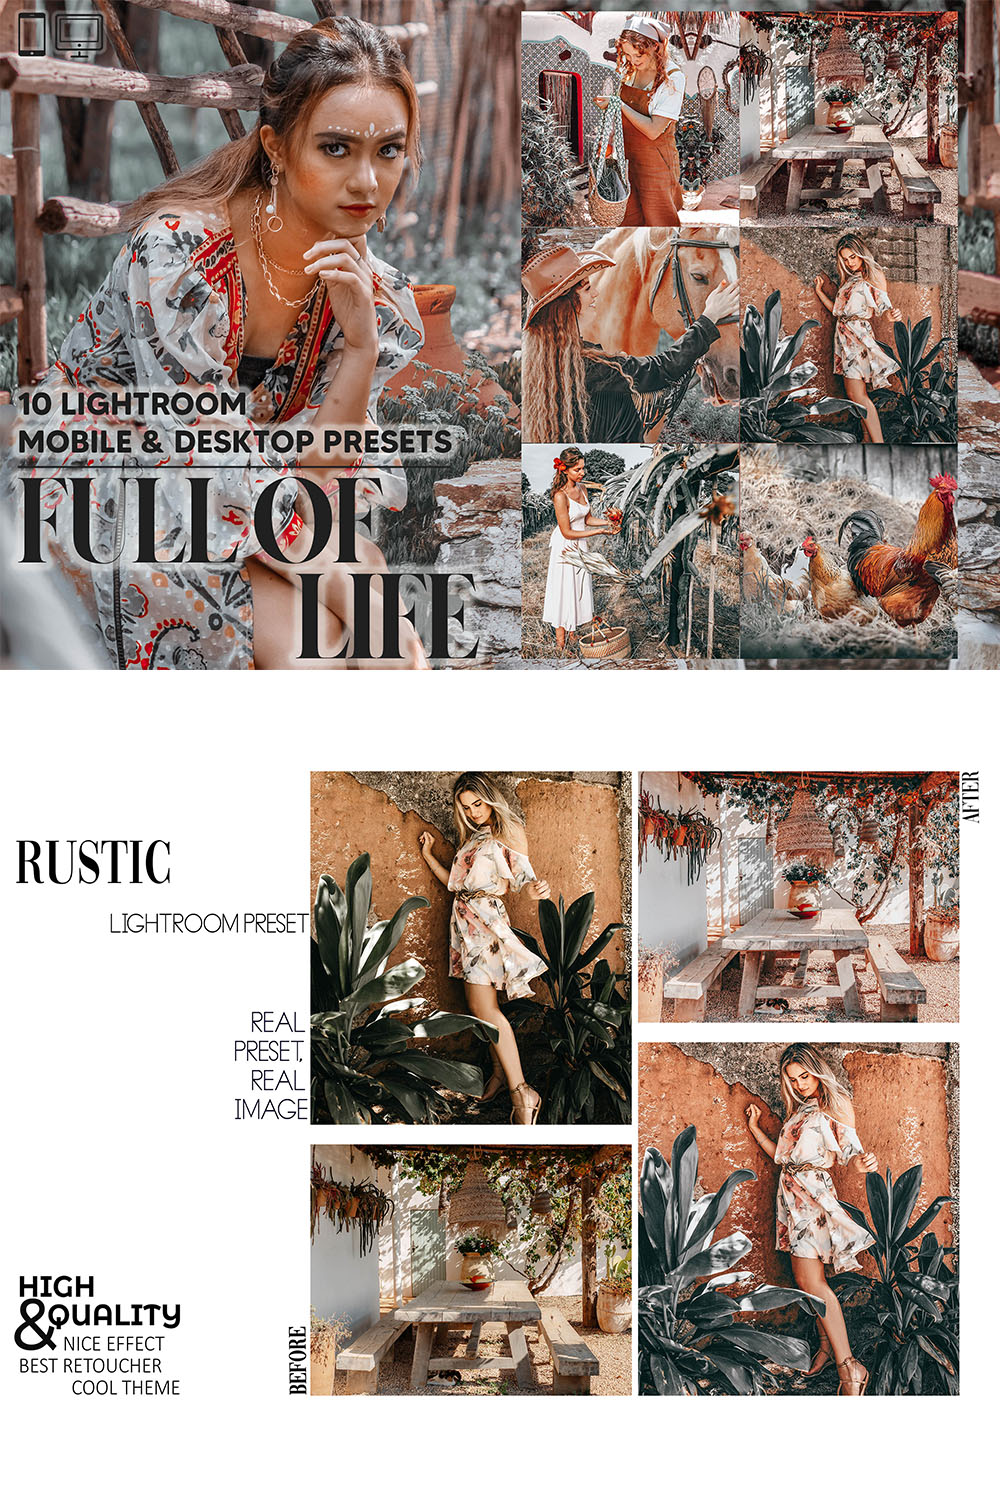 10 Full Of Life Lightroom Presets, Rustic Mobile Preset, Summer Girl Desktop, Lifestyle Portrait Theme Instagram LR Filter DNG Nature Boho pinterest preview image.